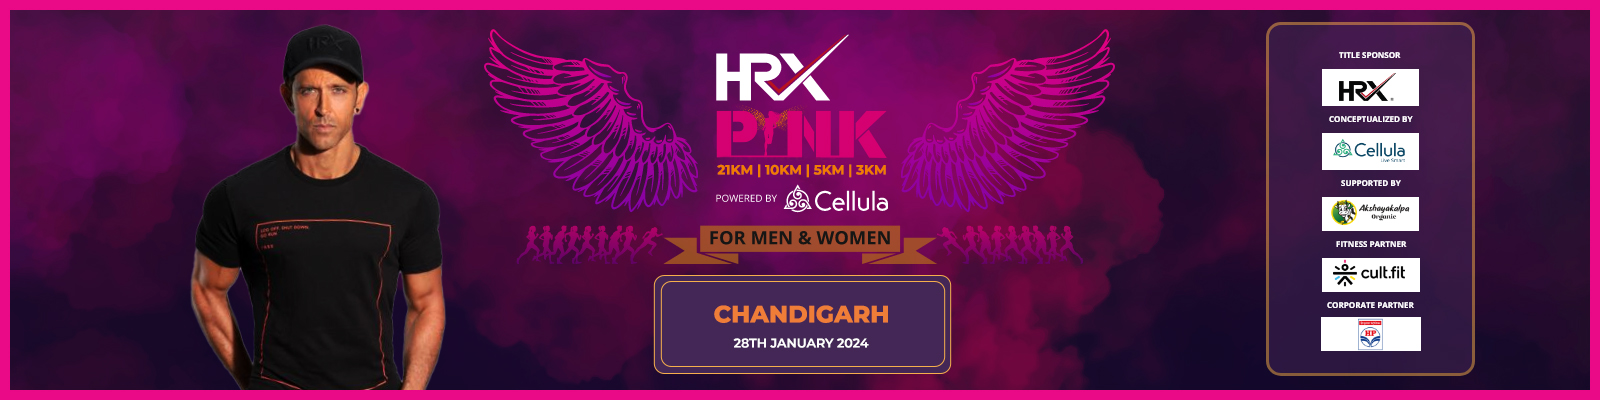 Let’s Make Women’s Health & Safety A Priority With HRX PINK MARATHON CHANDIGARH